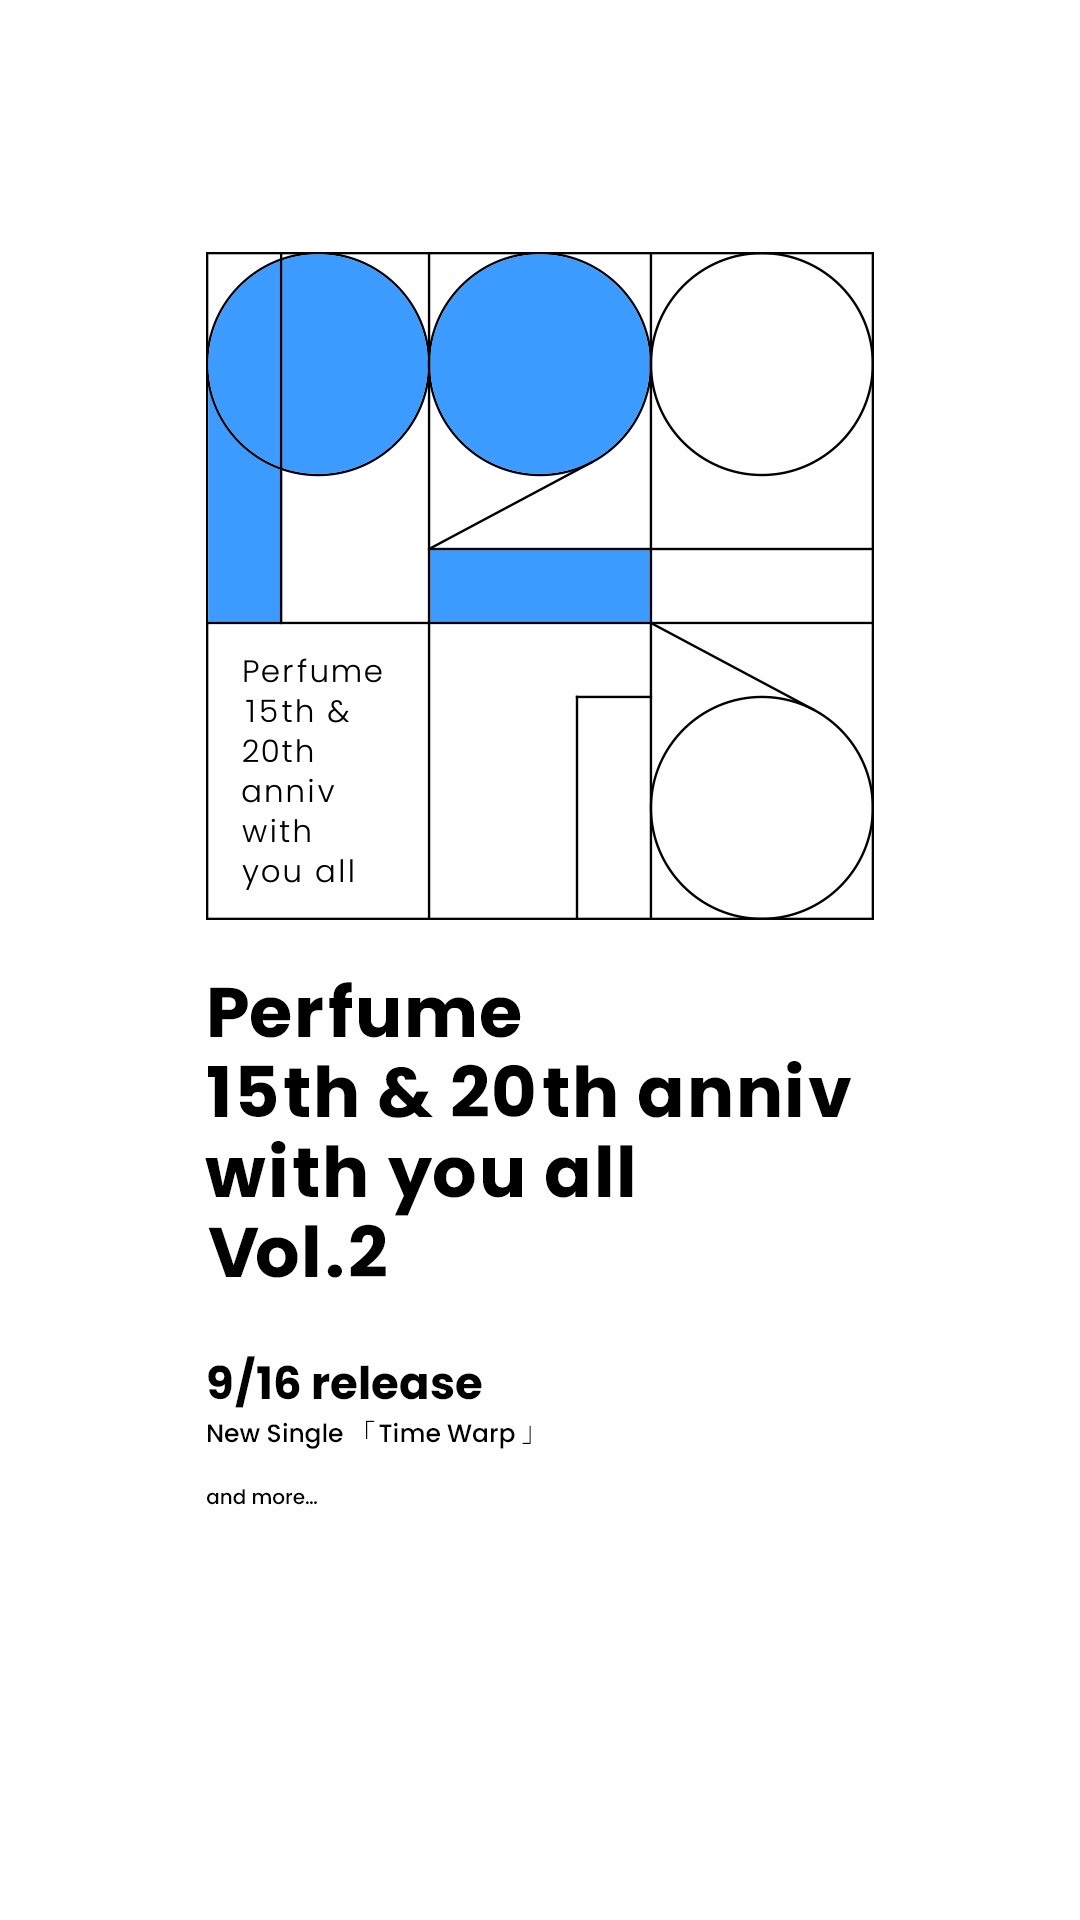 Perfume 約2年半ぶりの新シングル Time Warp 発売決定 Daily News Billboard Japan